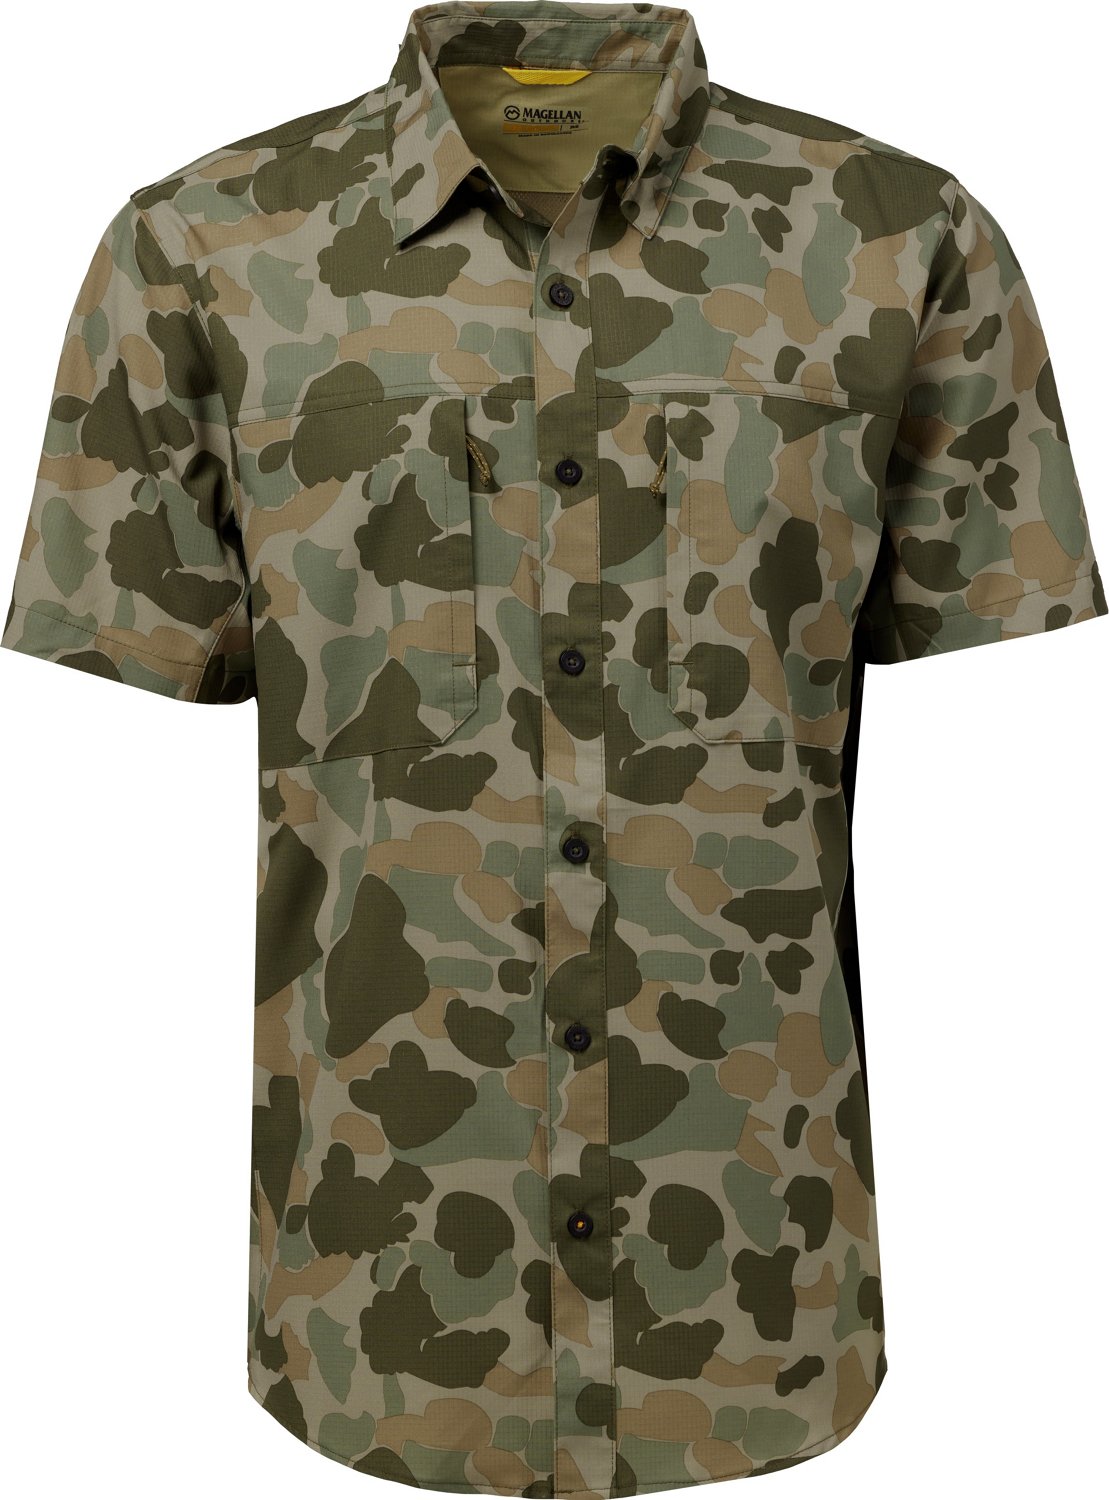 Hunting & Camo Short Sleeve Shirts